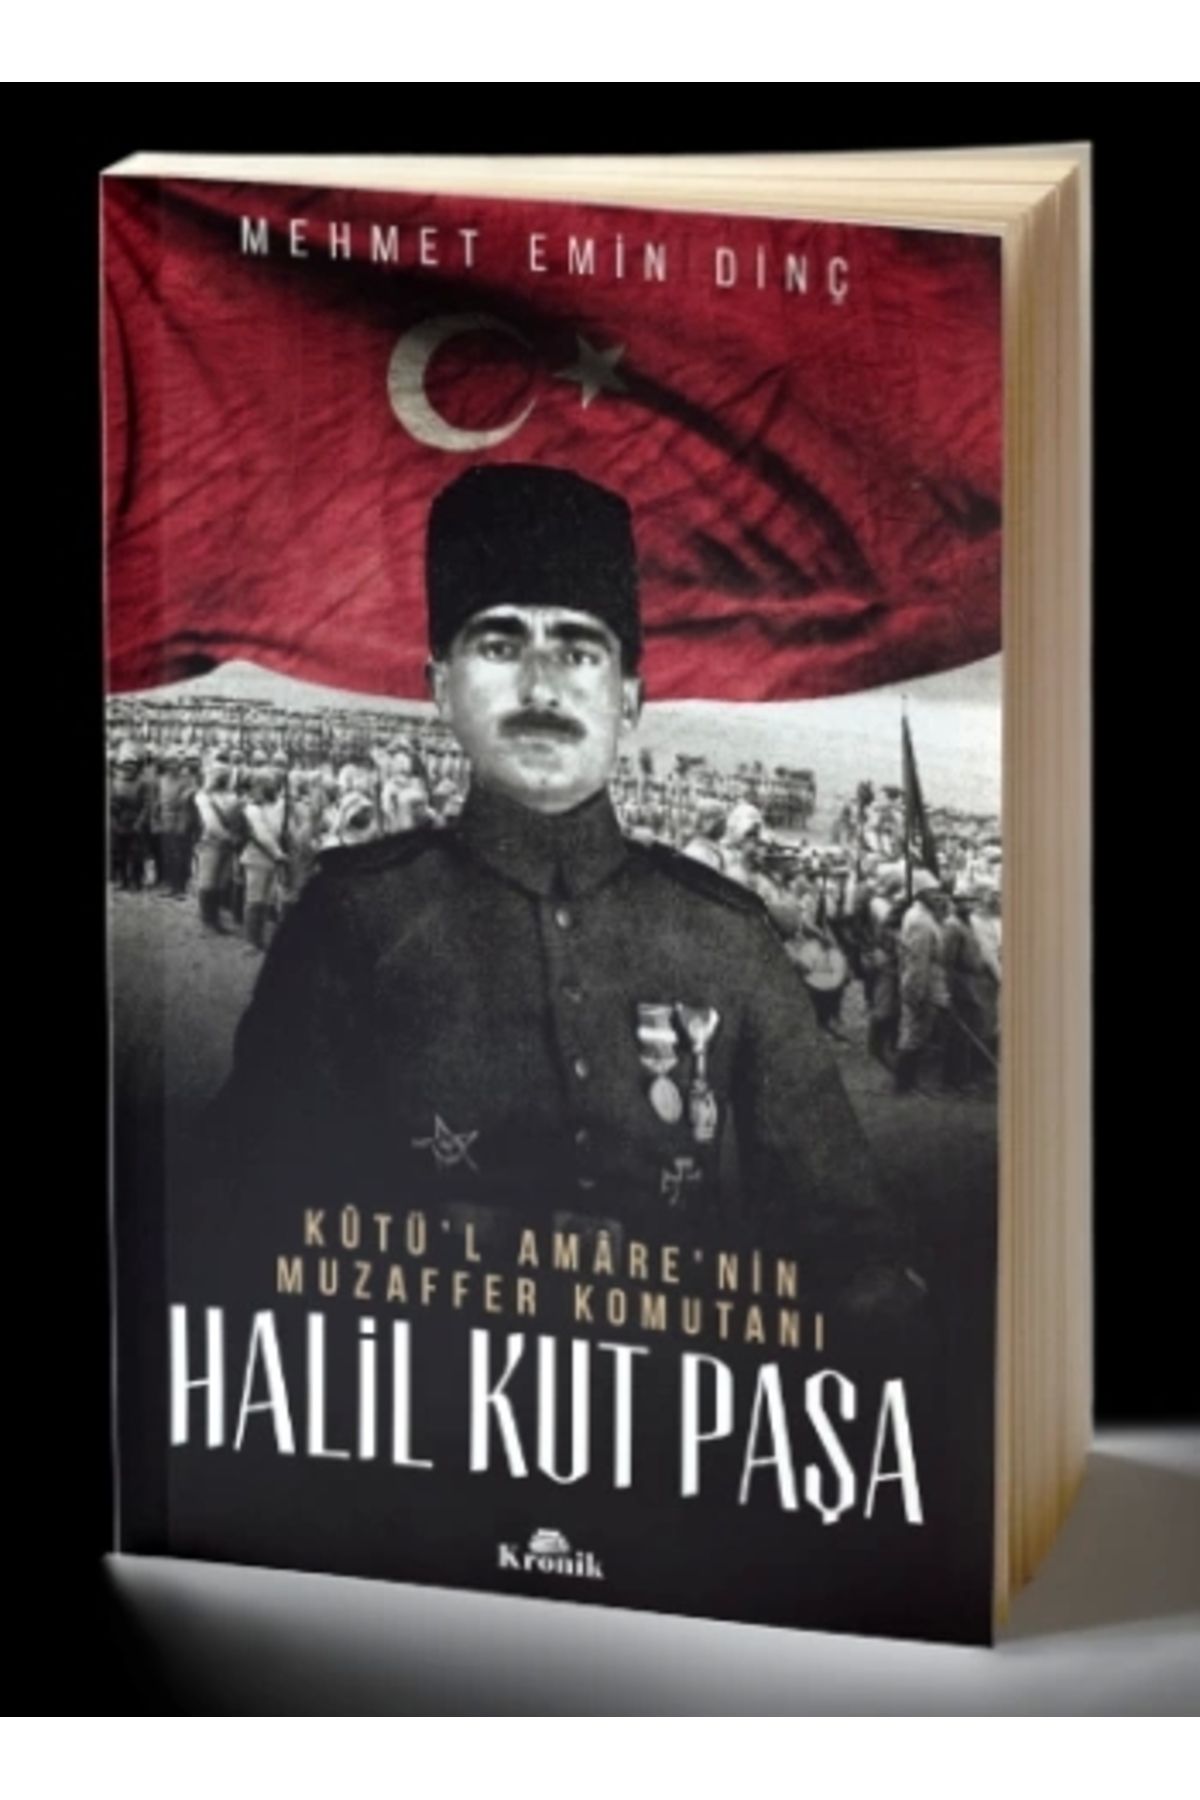 Kronik Kitap Kutü'l Amare'nin Muzaffer Komutanı Halil Kut Paşa